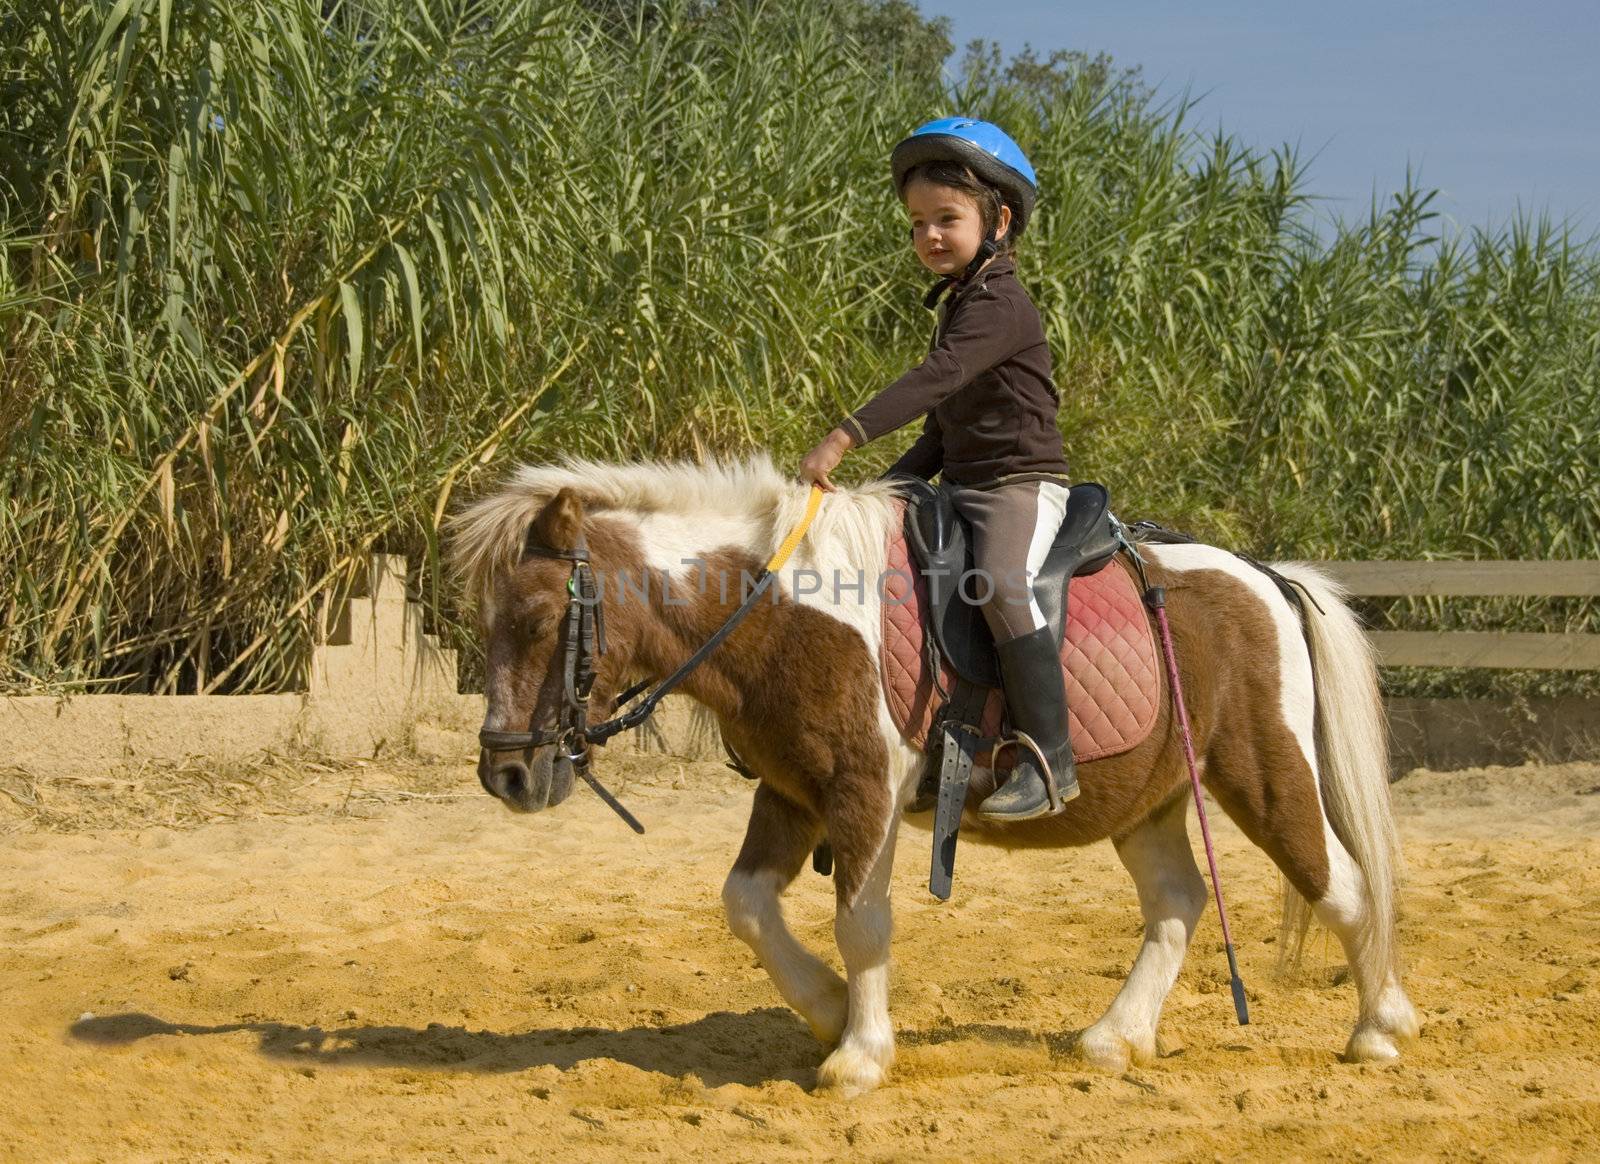 riding little girl by cynoclub